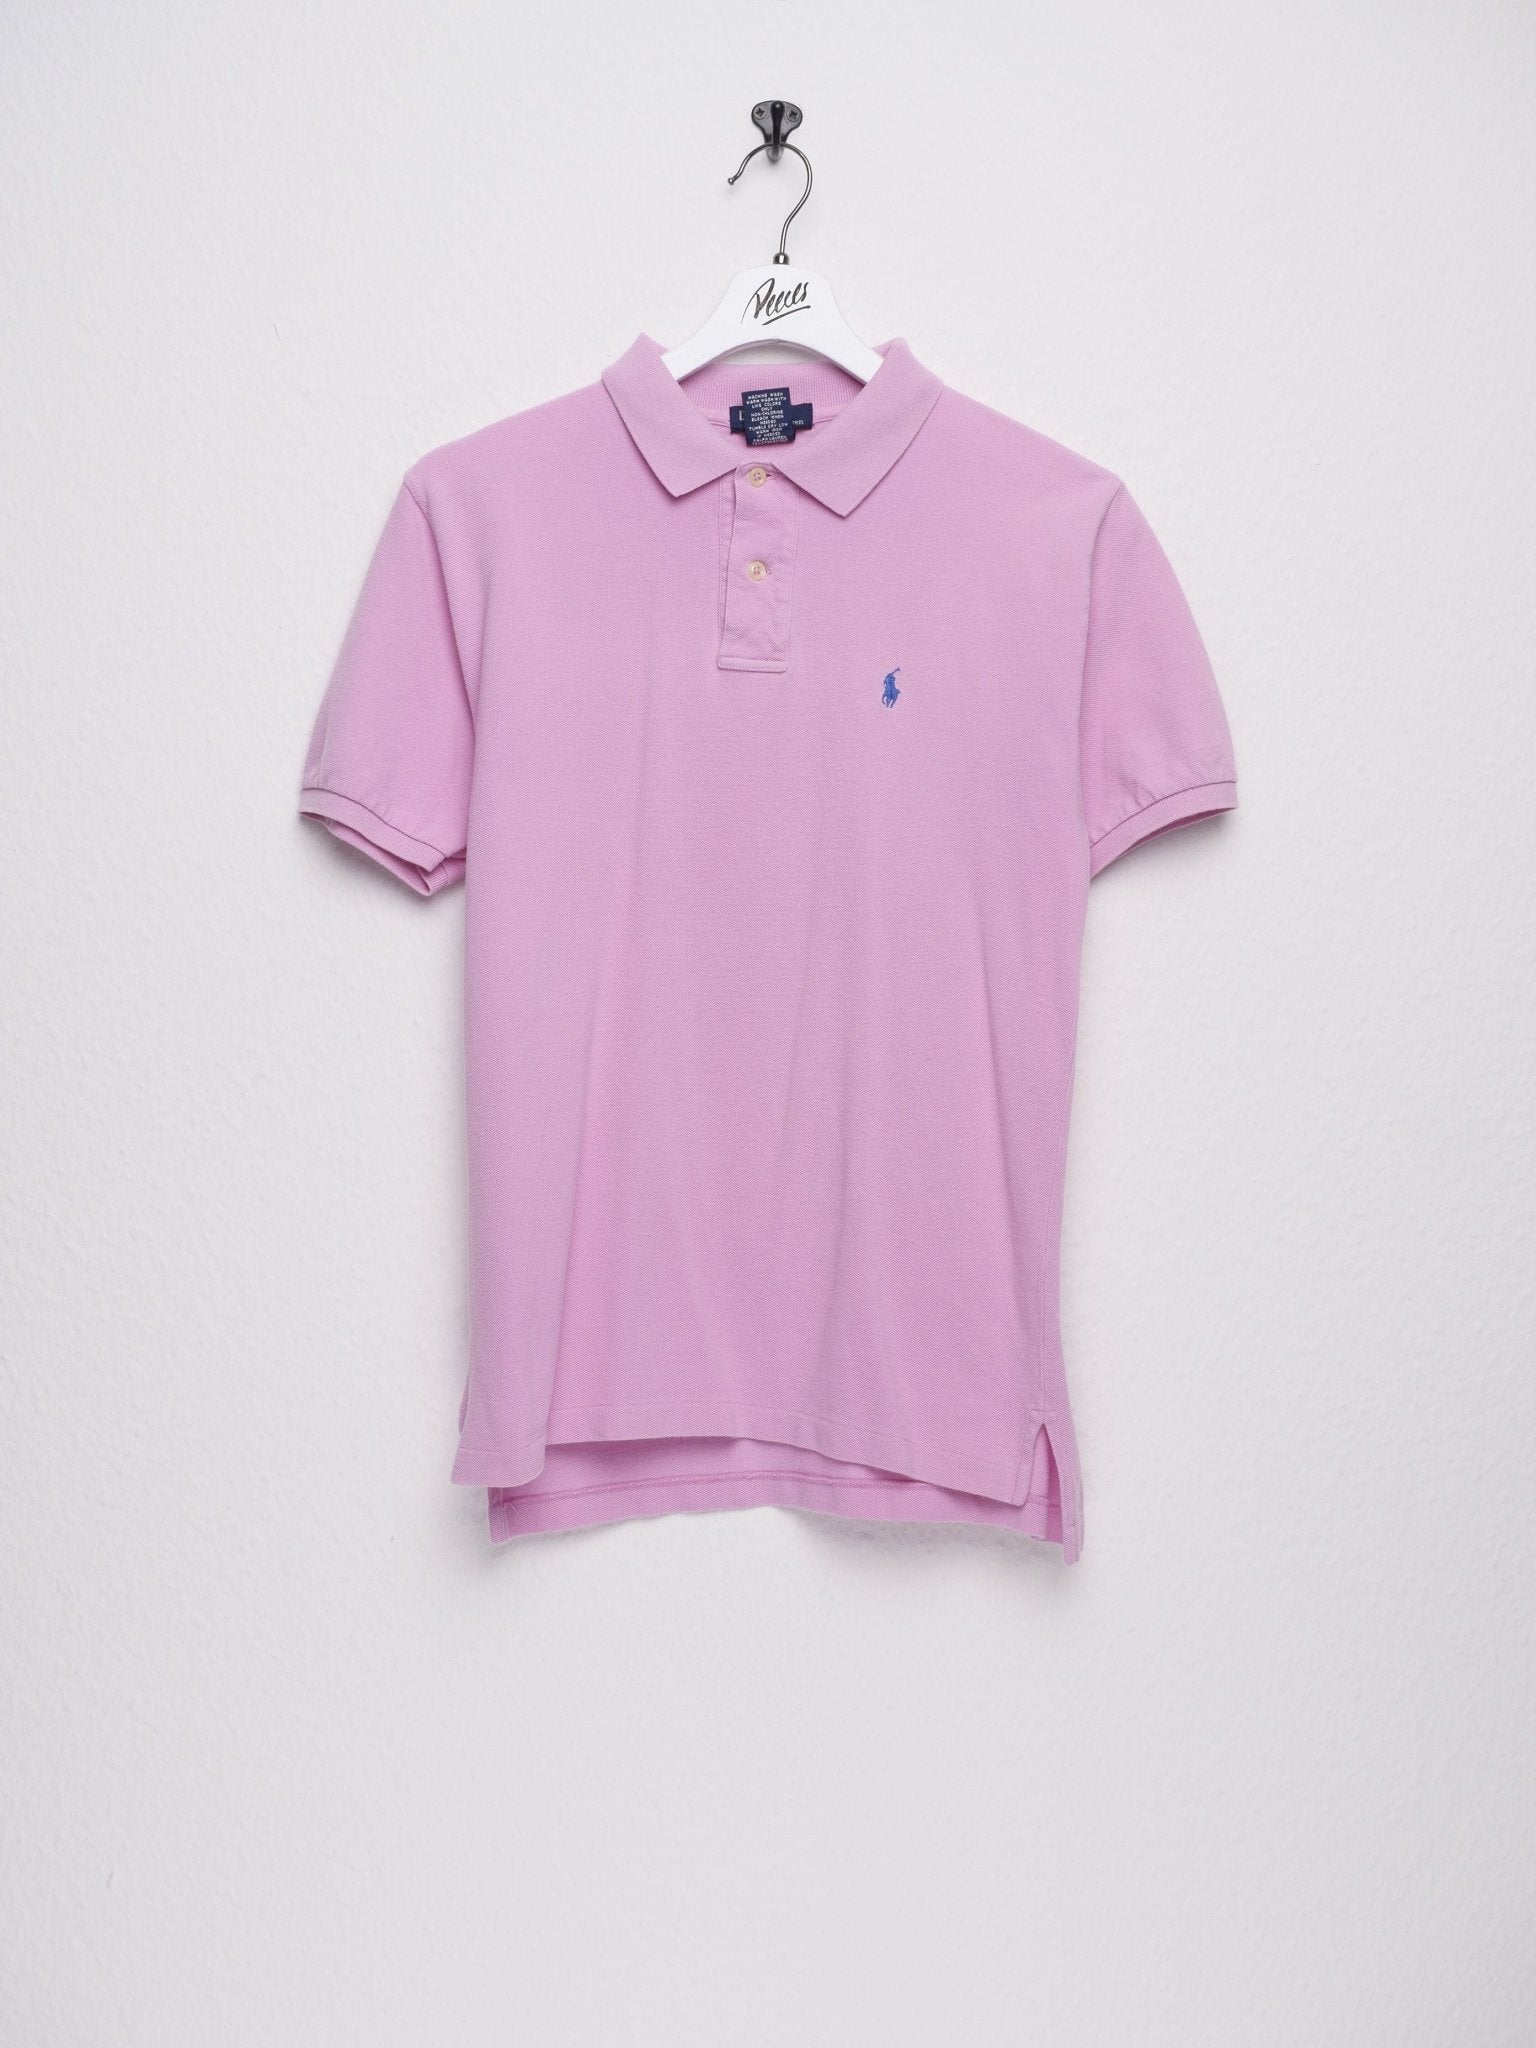 polo Ralph Lauren embroidered Logo pink S/S Shirt - Peeces